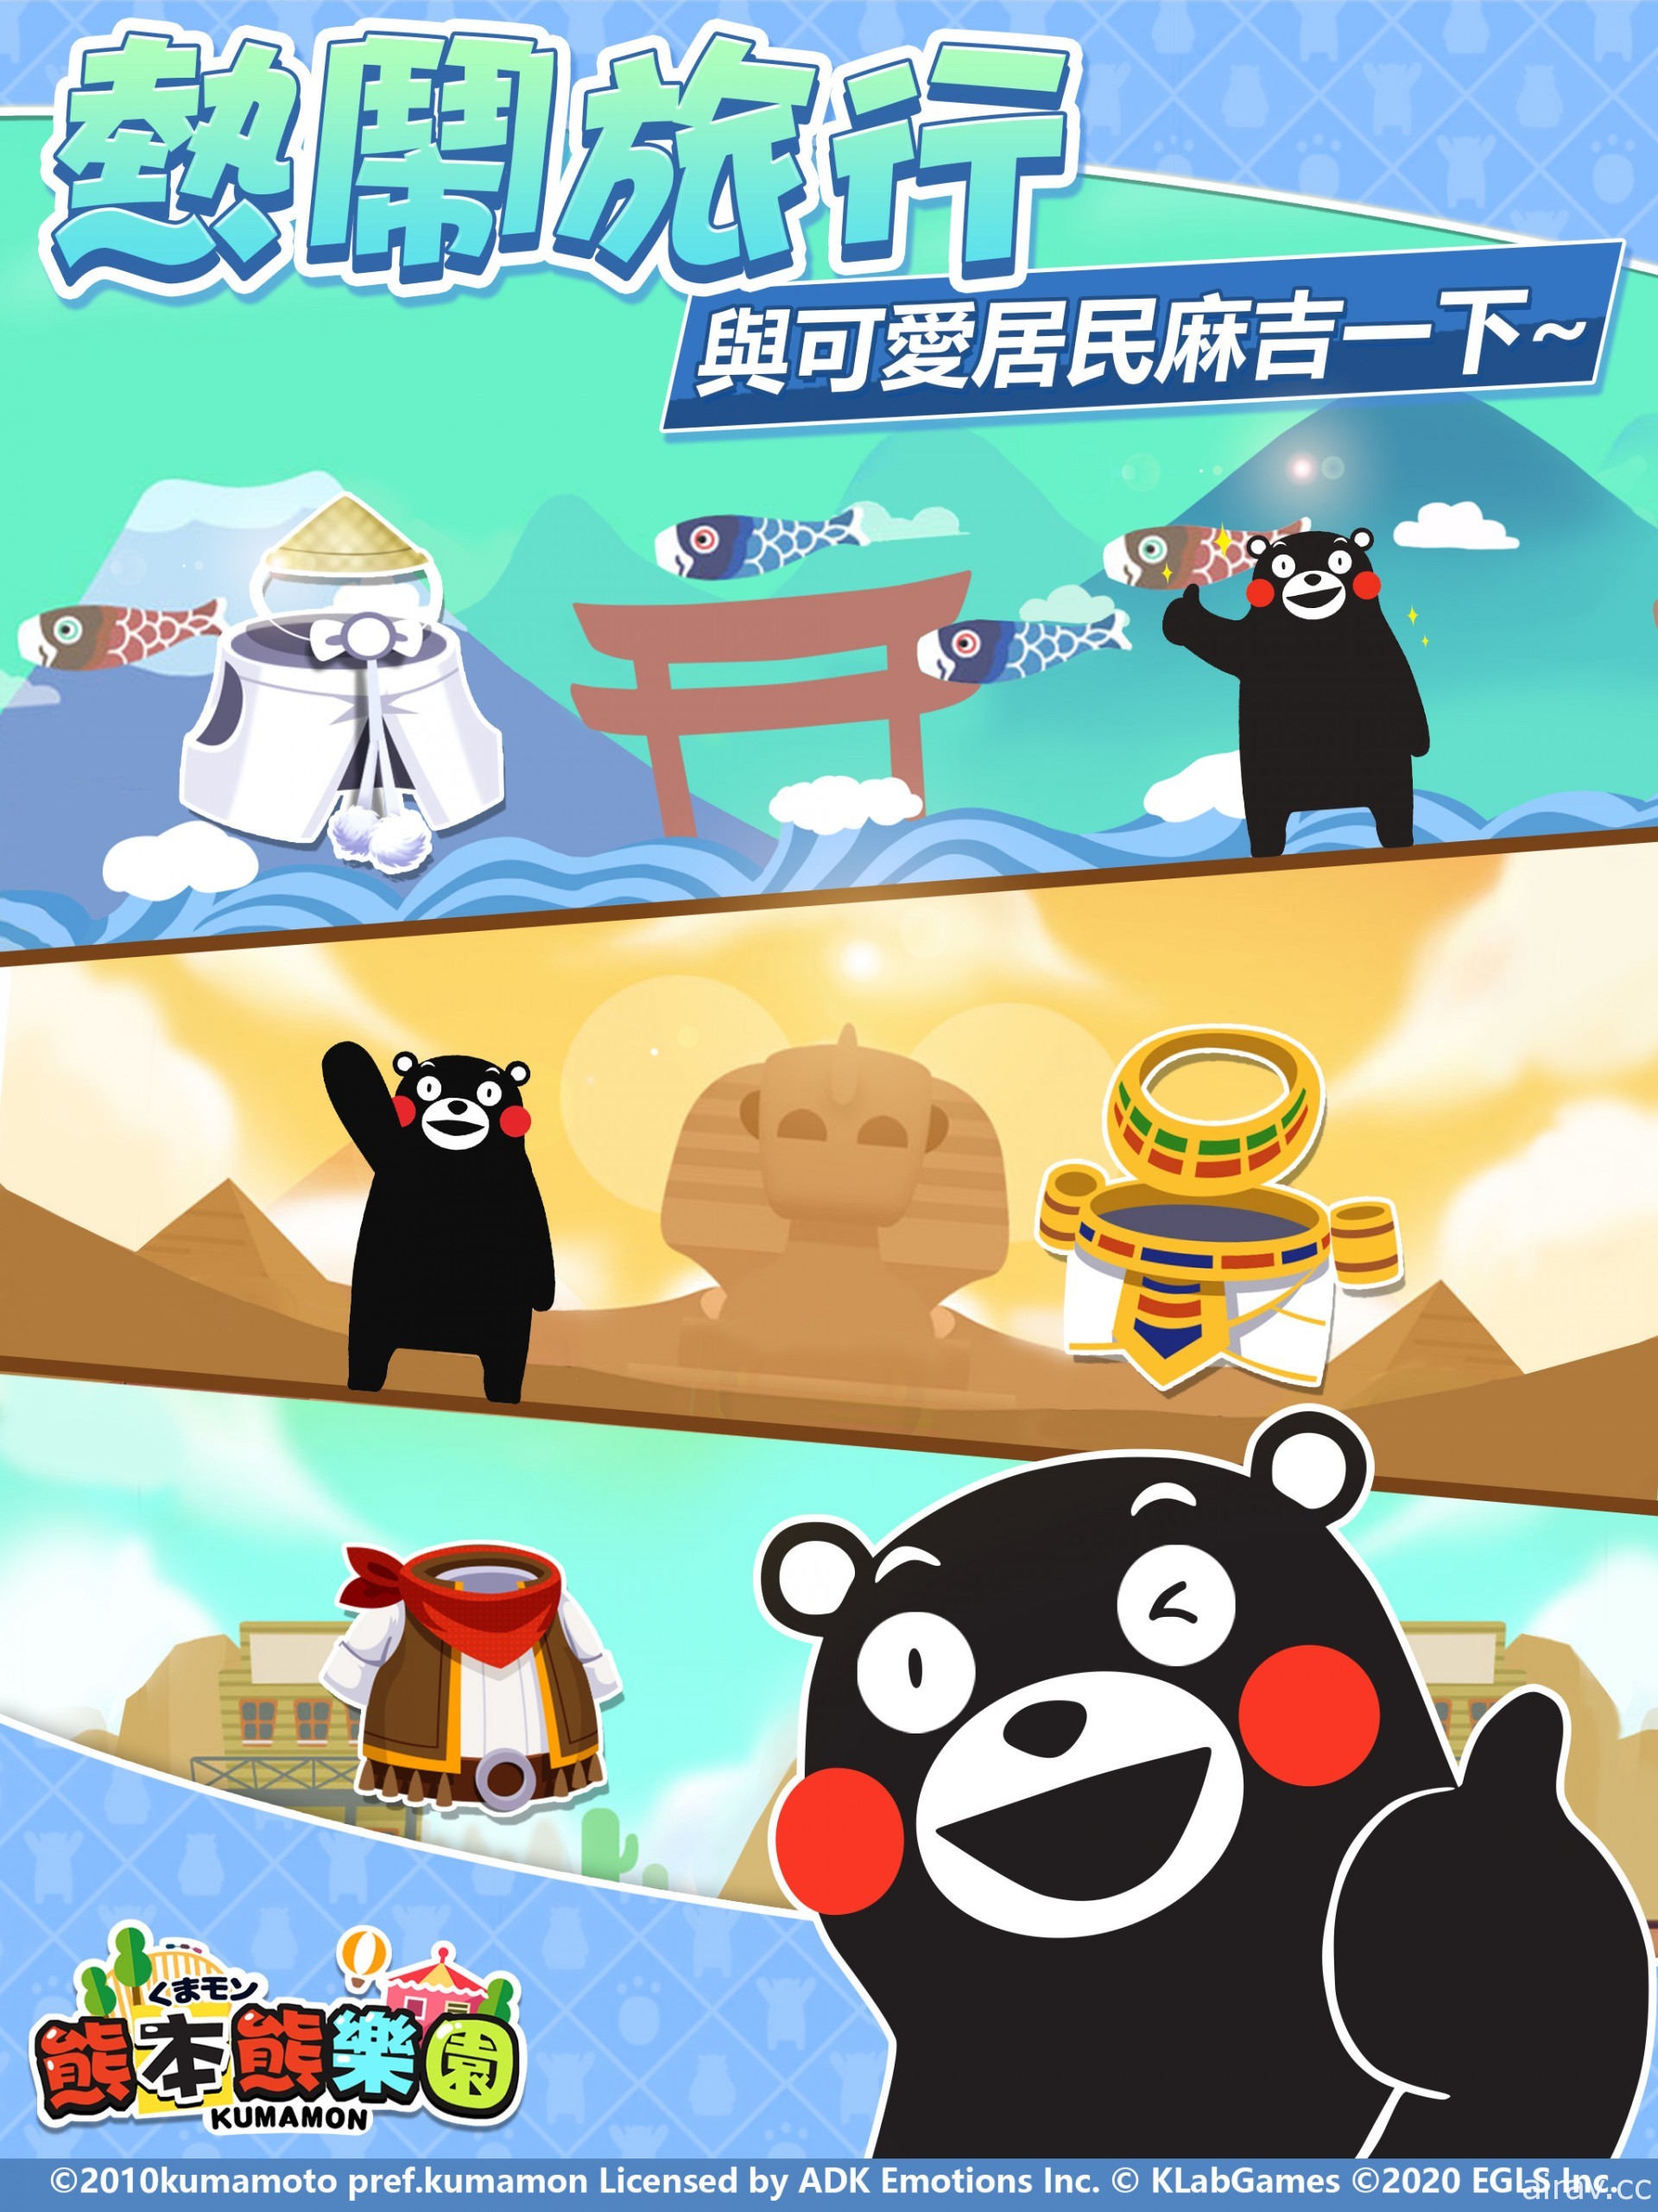 Kumamon 正版授權三消經營遊戲《熊本熊樂園》確定在台港澳地區推出